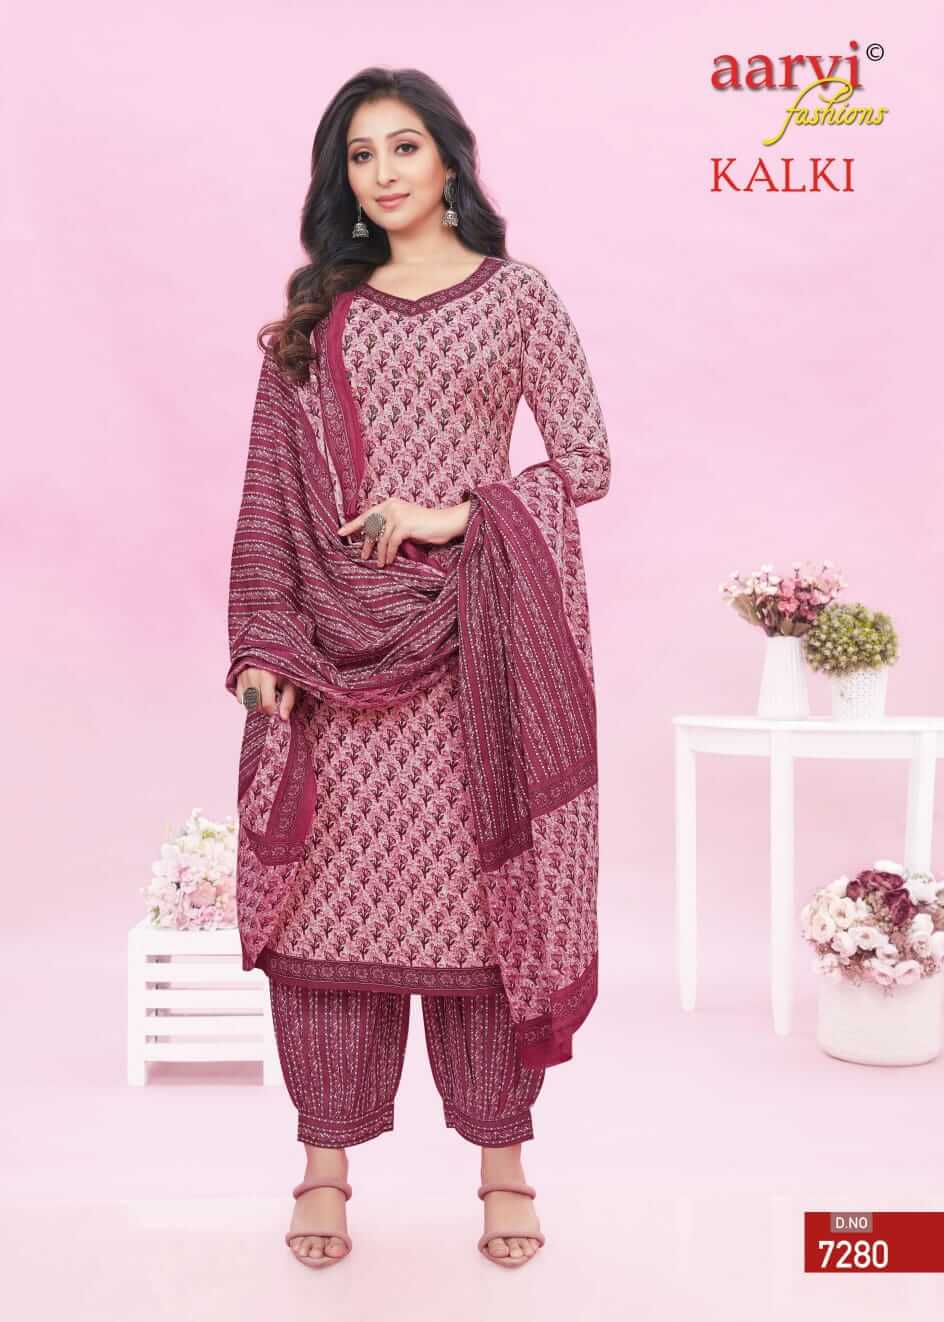 Aarvi Fashion Kalki vol 2 Cotton Salwar Kameez collection 6